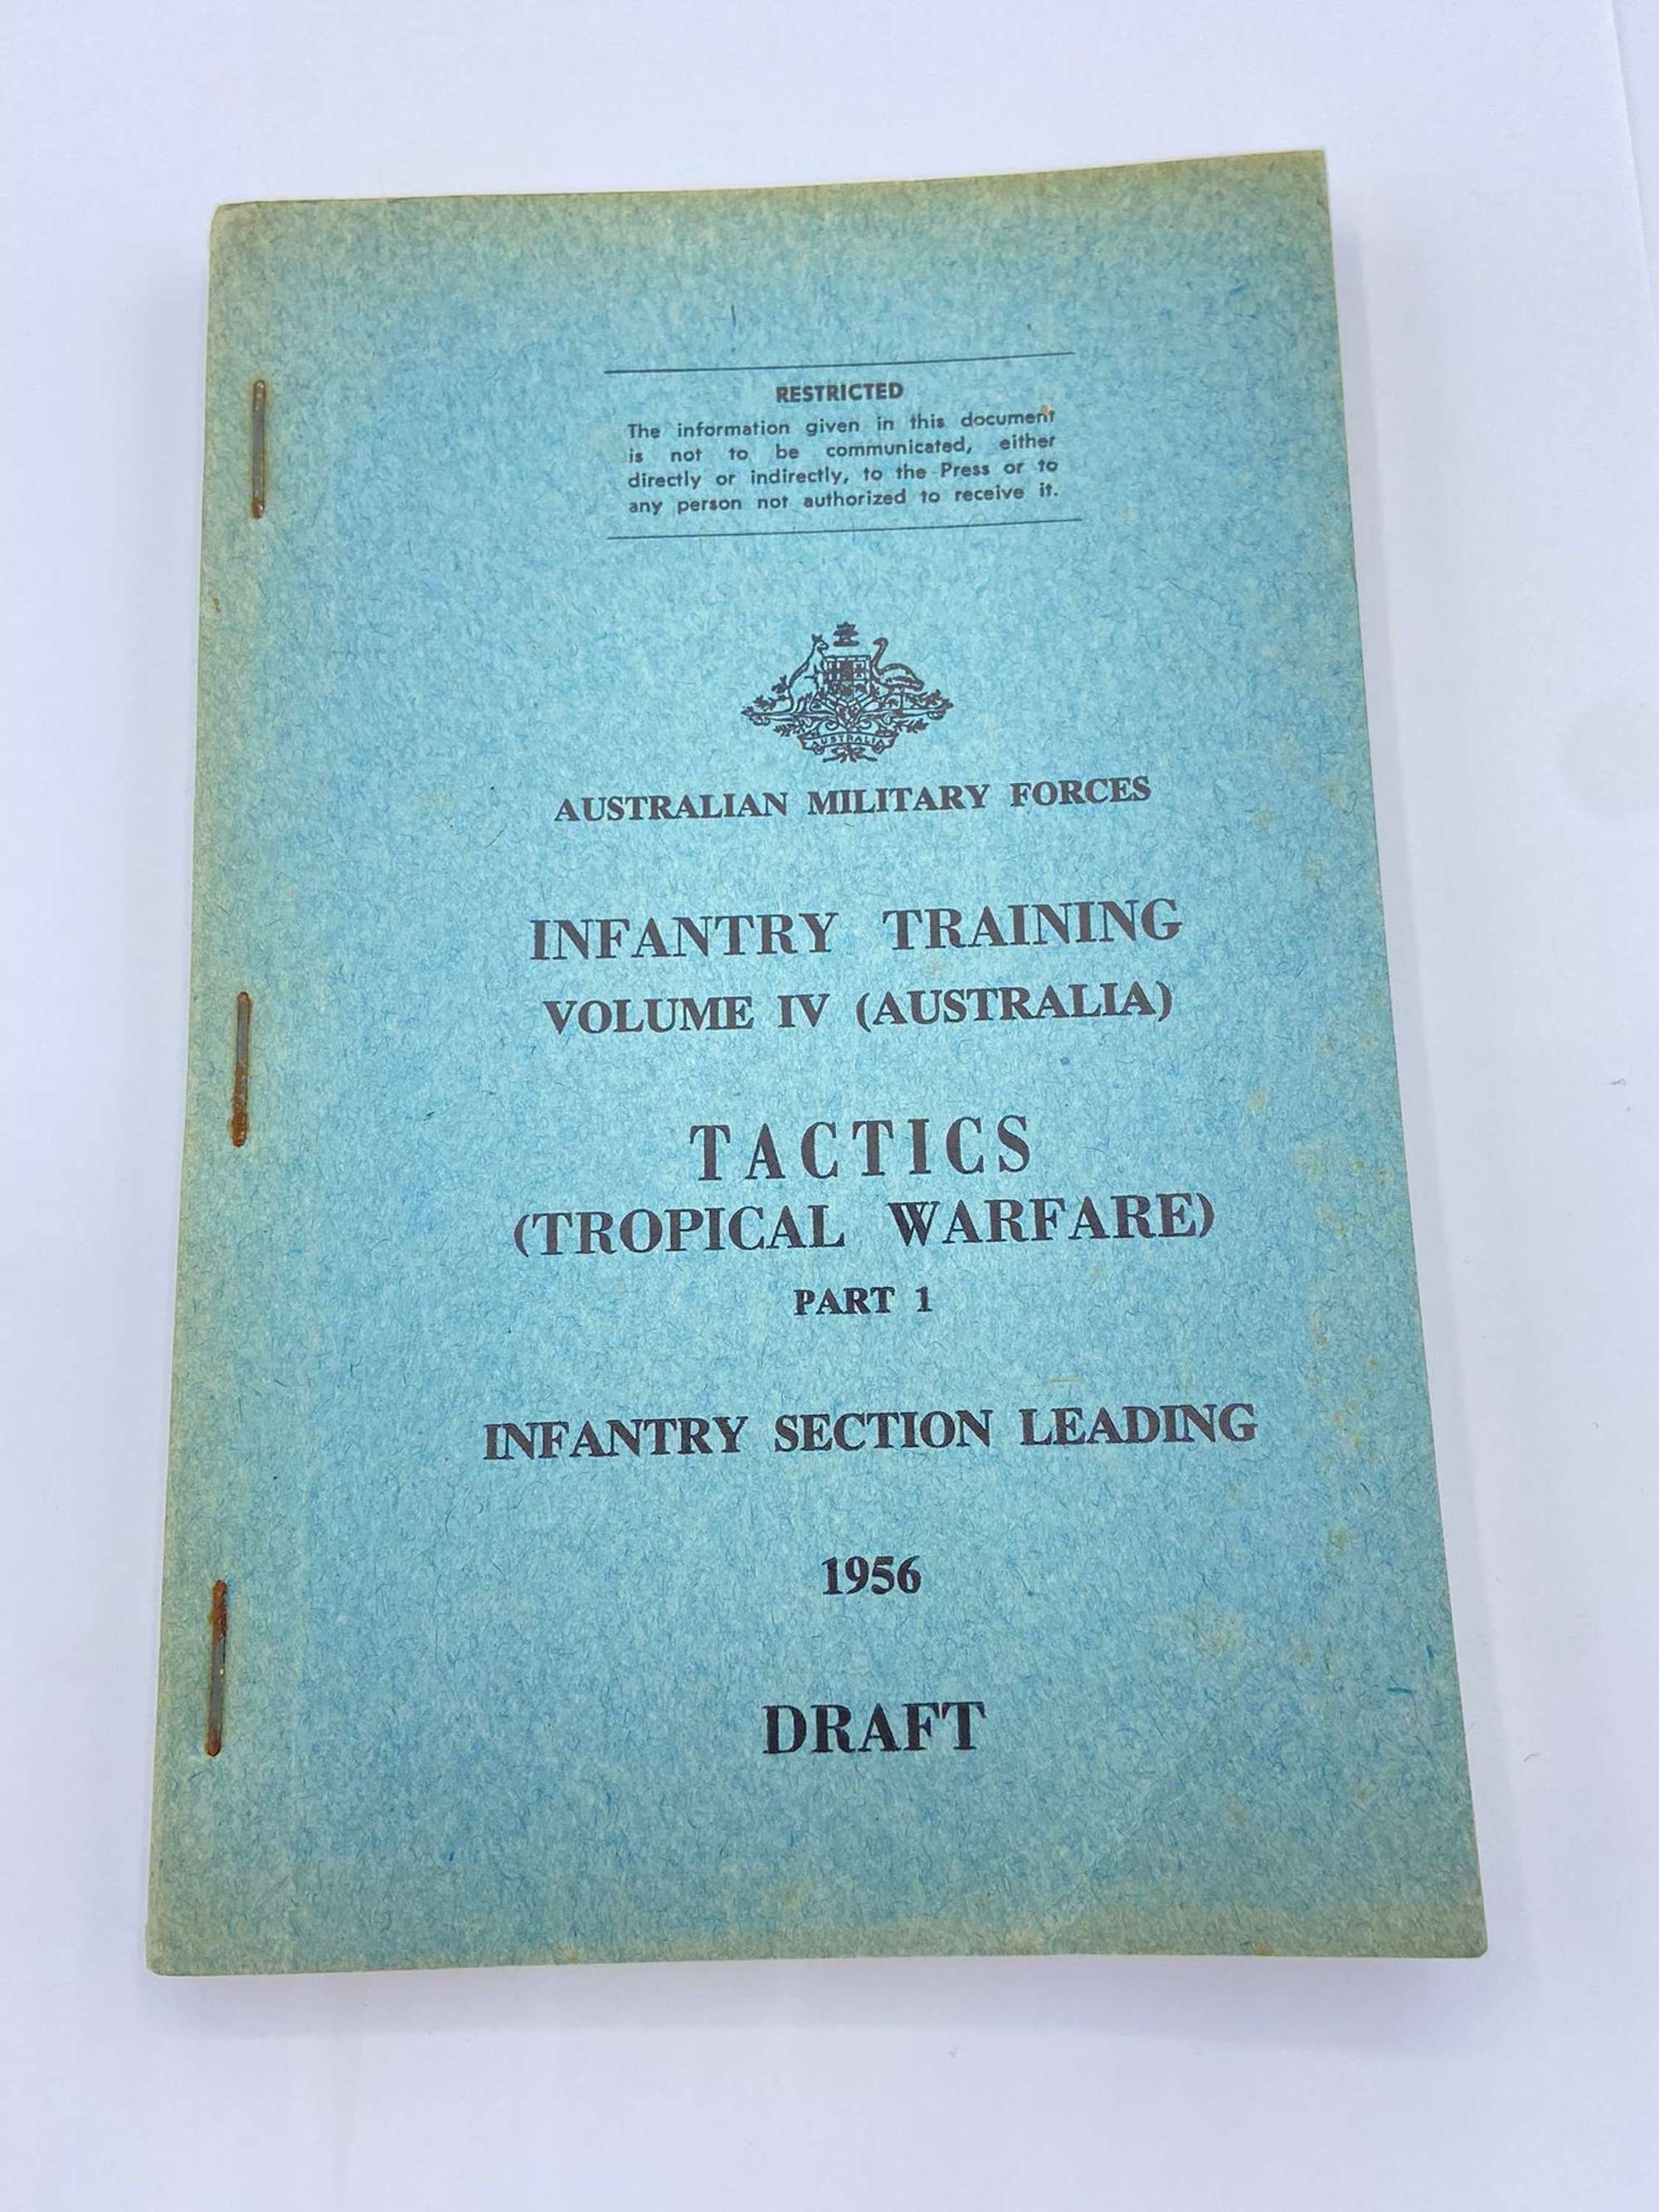 WW2 Australian Infantry Training Tactics Tropical Warfare Pamphlet